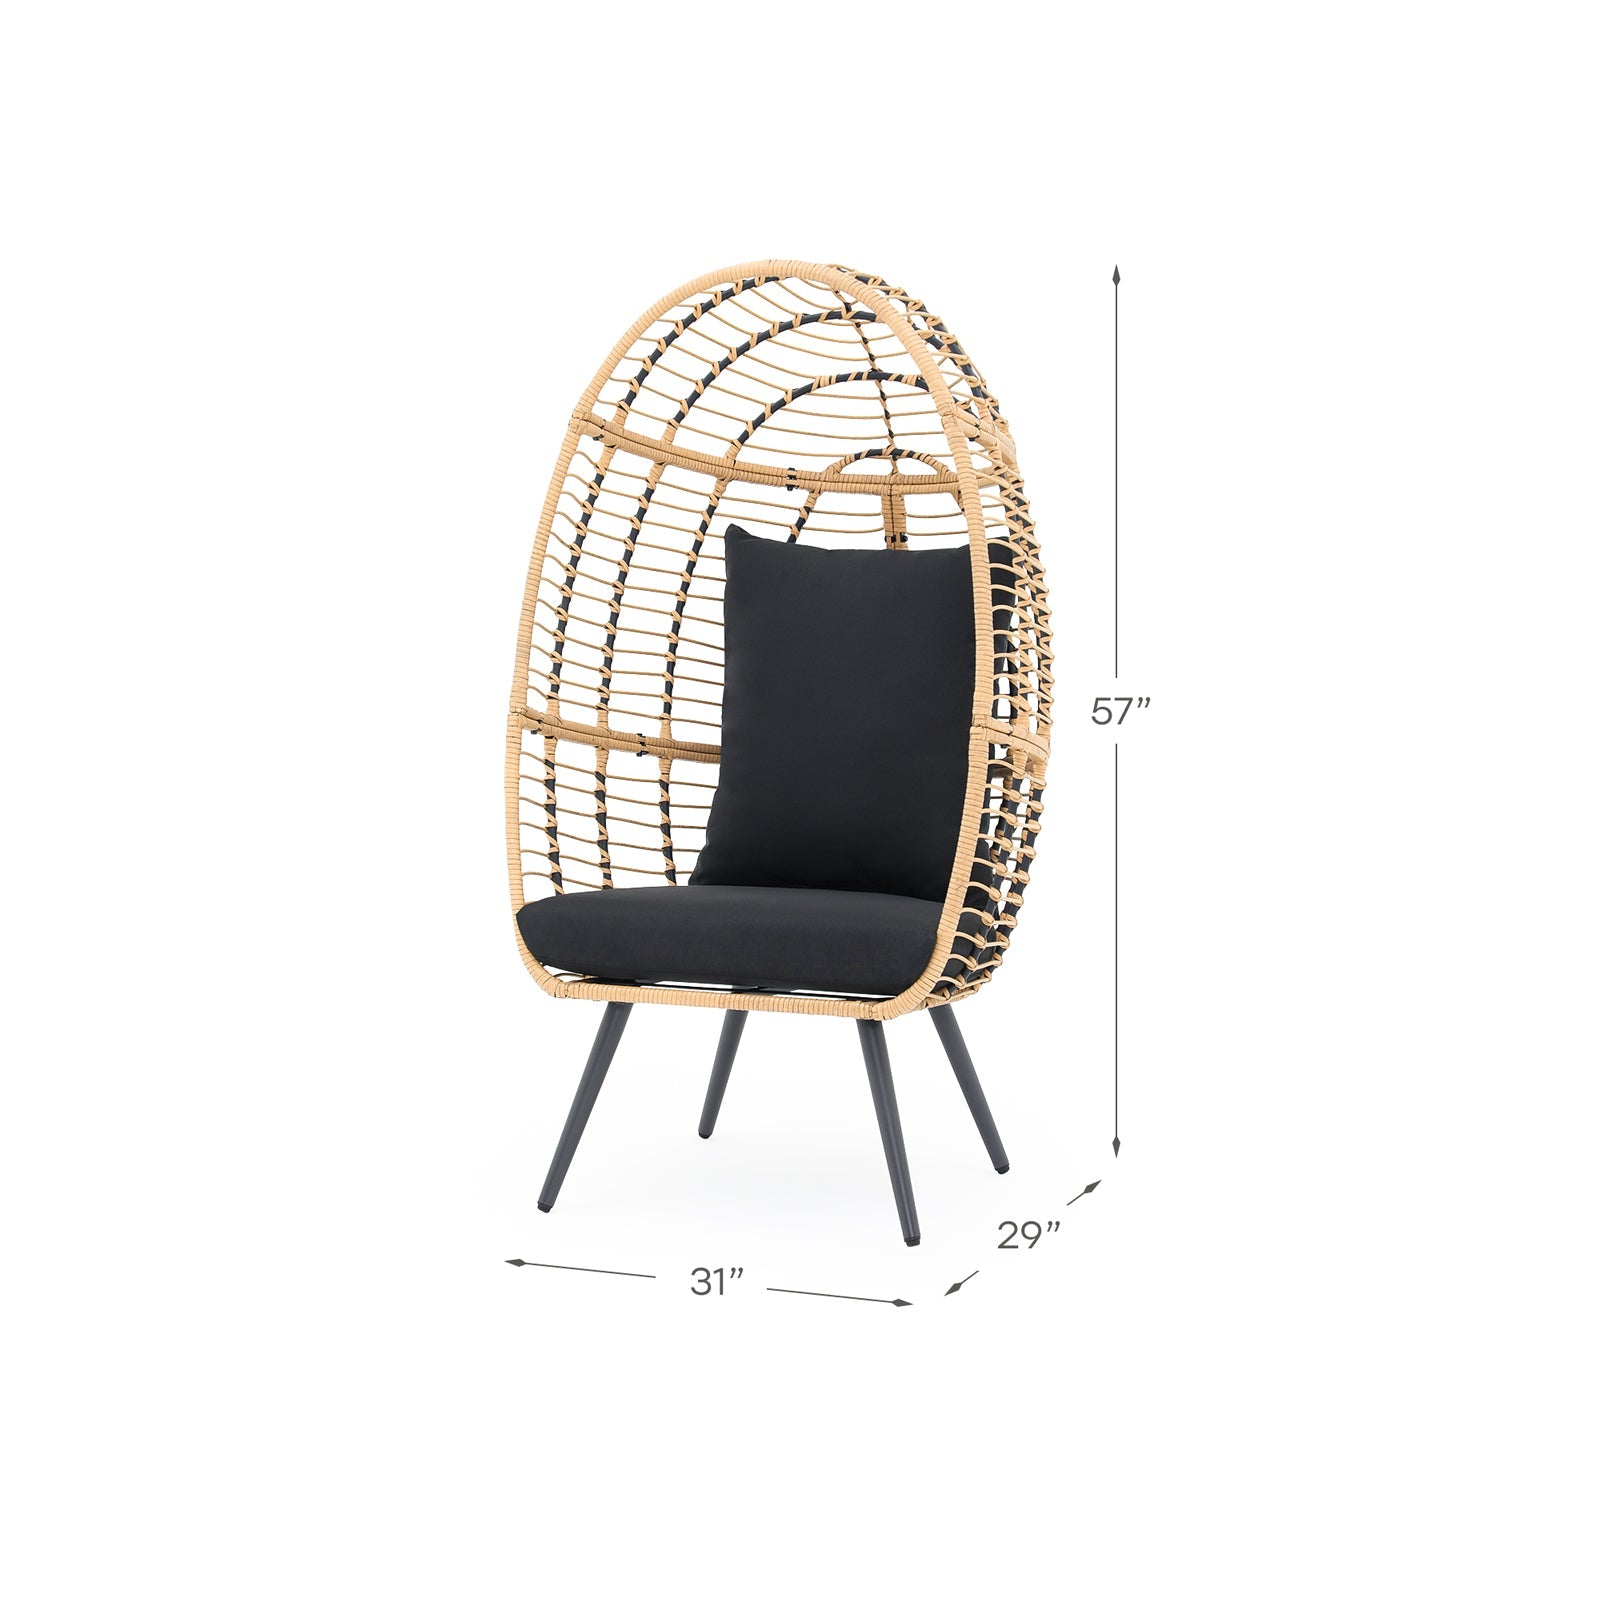 Oia Egg Chair with black cushions, dimension info - Jardina FurnitureColor_Black